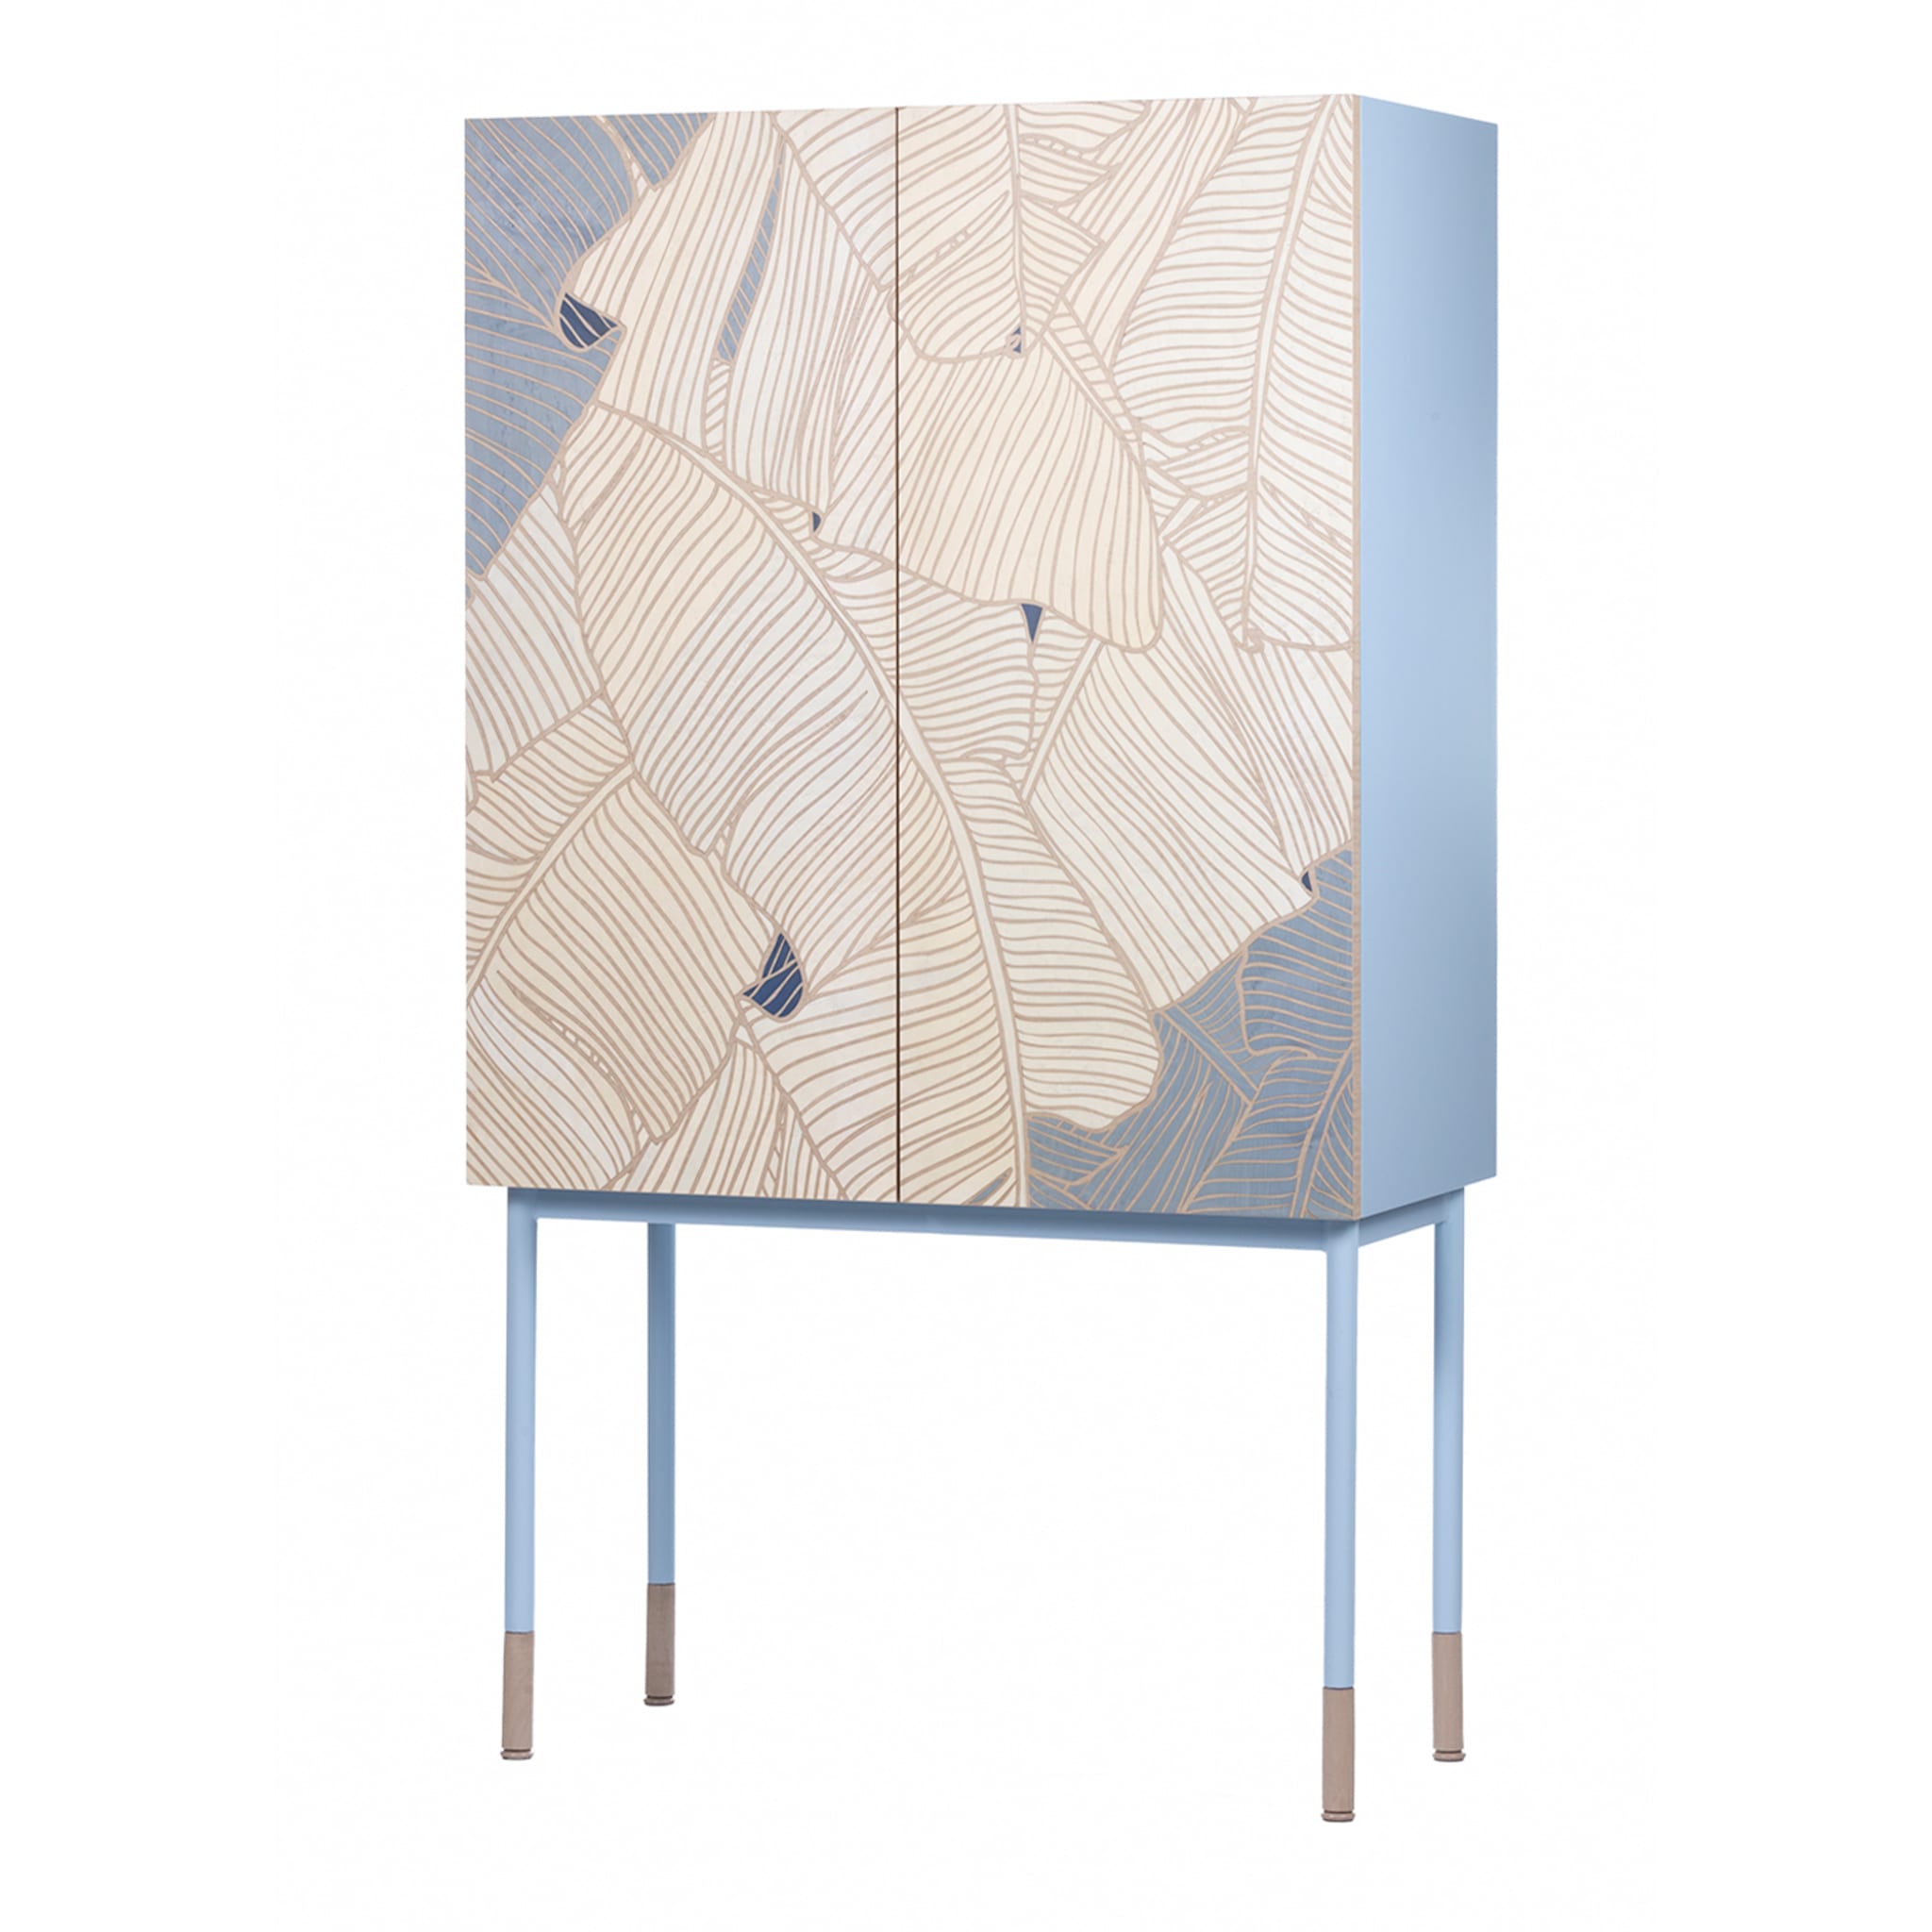 Basjoo Azure Cabinet by Hebanon Studio - Alternative view 1